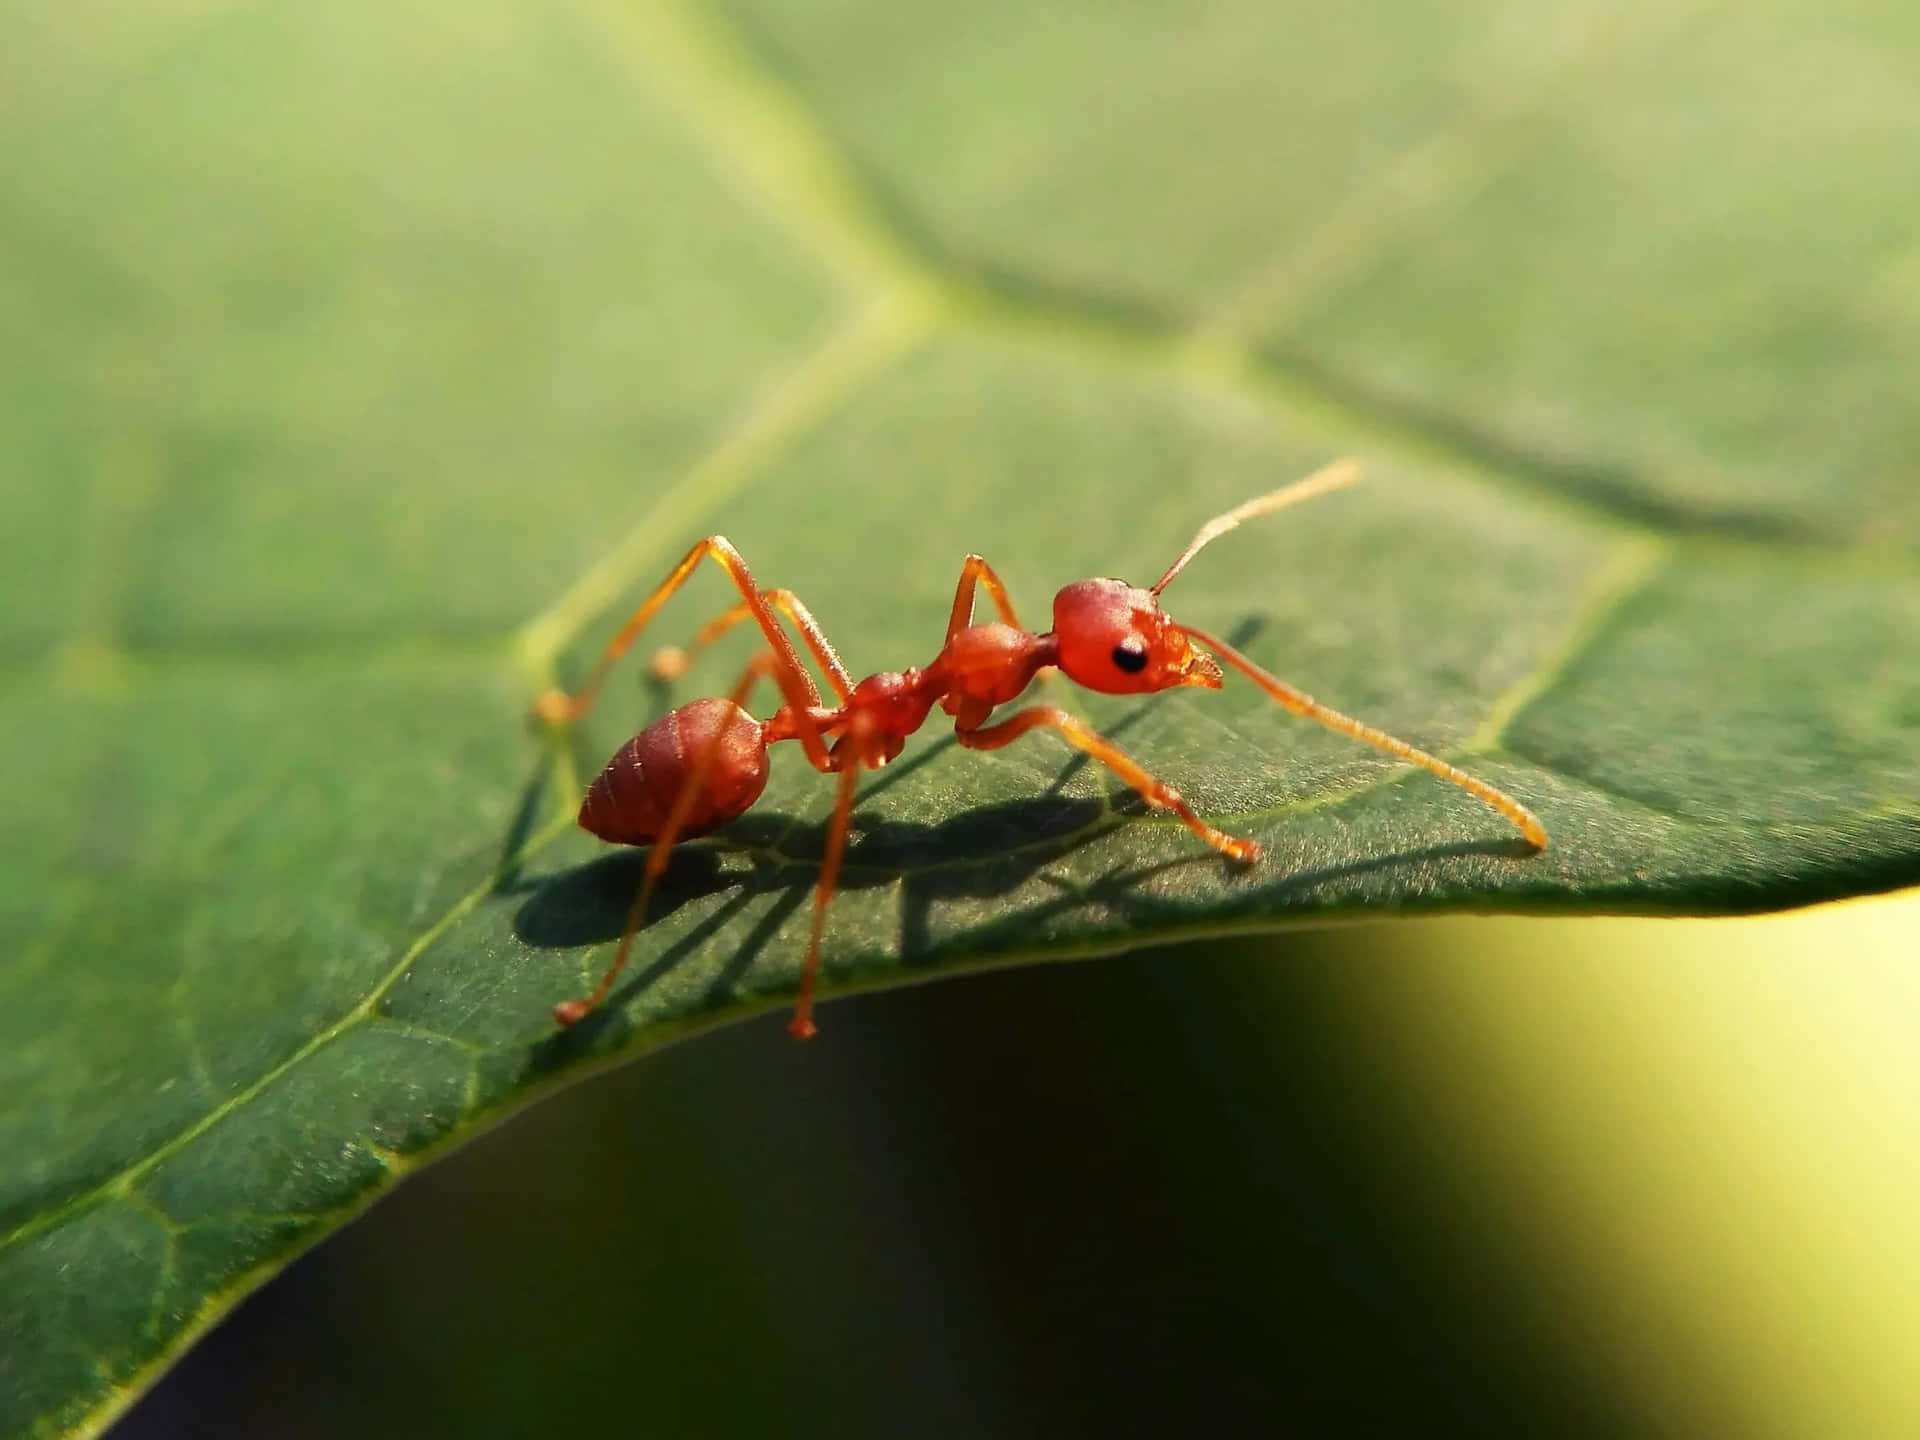 An Ant Balancing On A Leaf